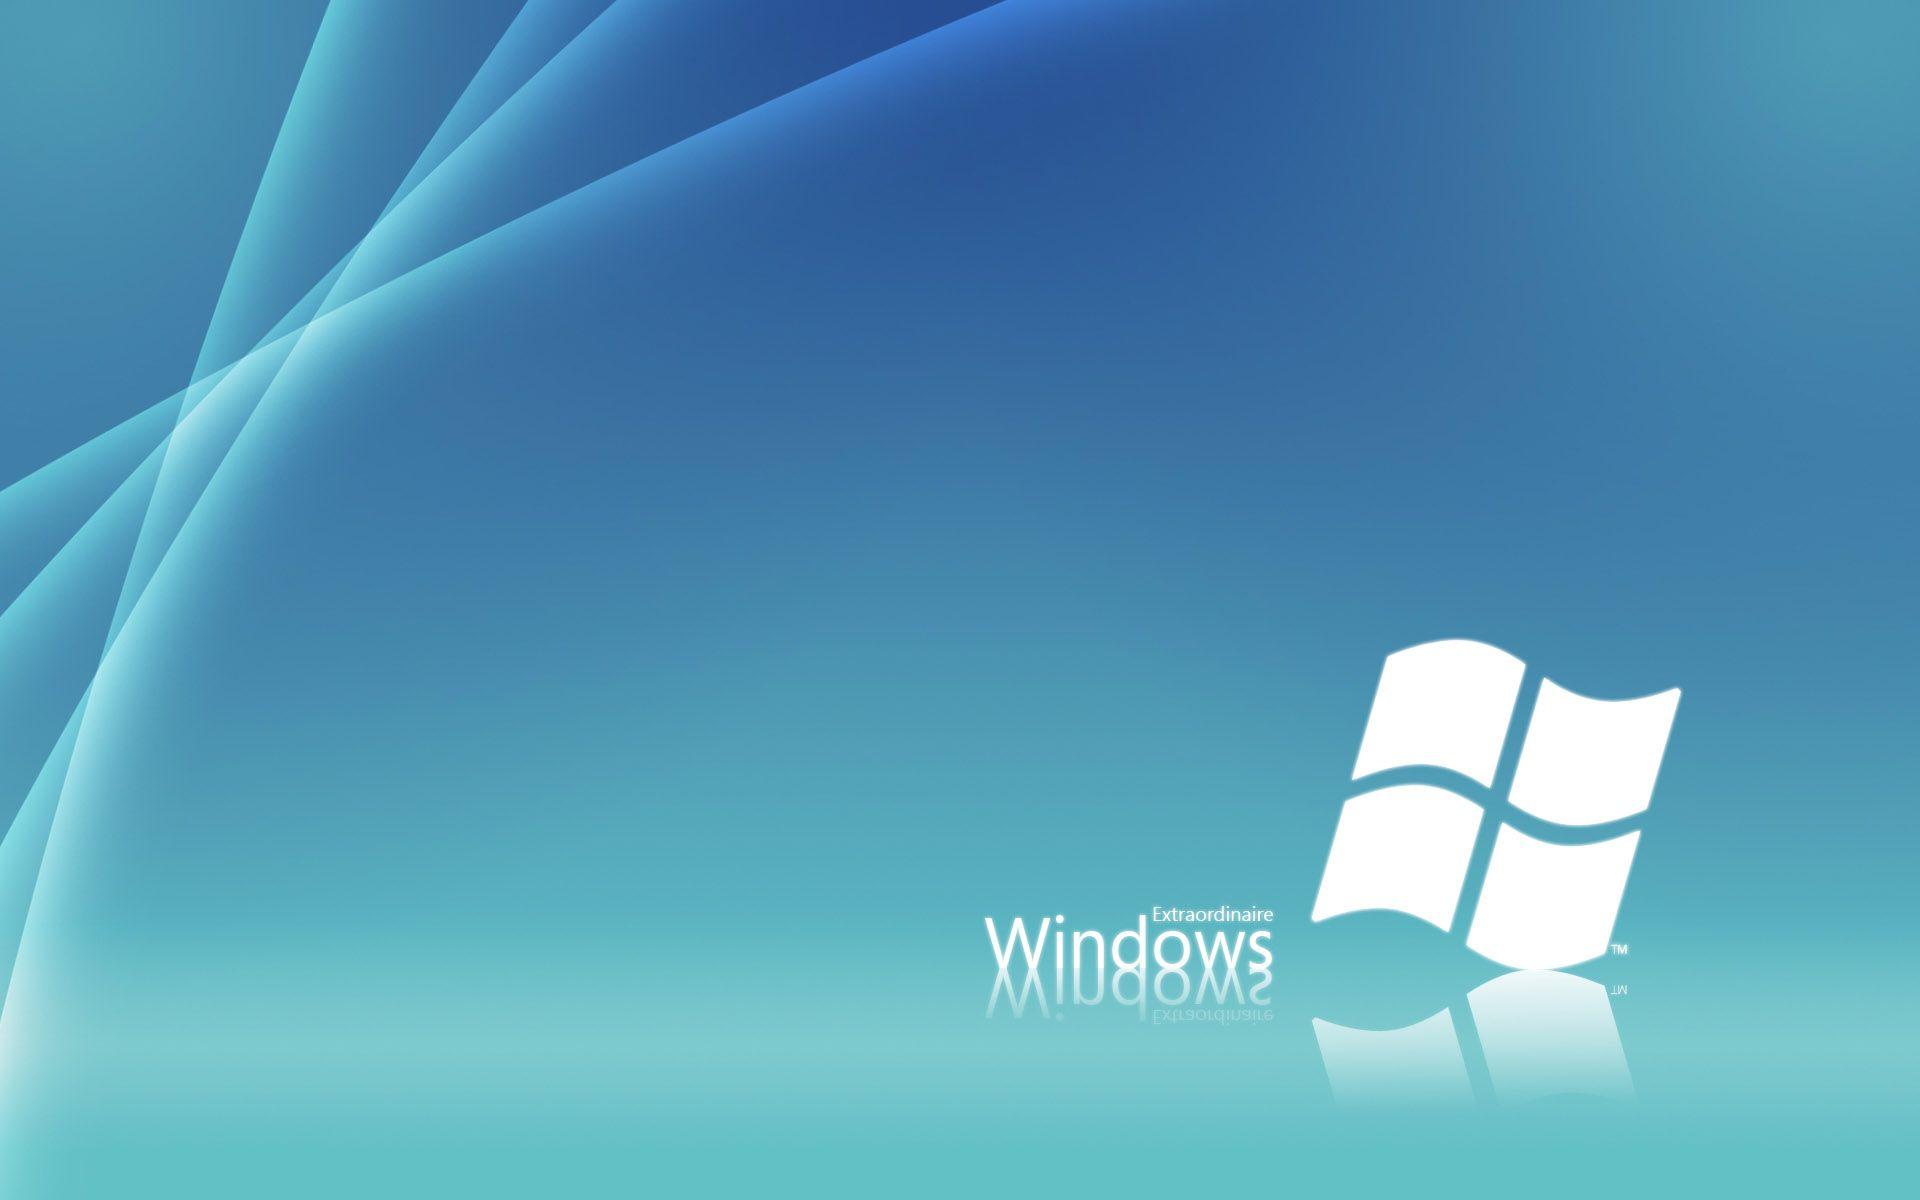 Microsoft Windows 7 Wallpaper. High Quality Wallpaper